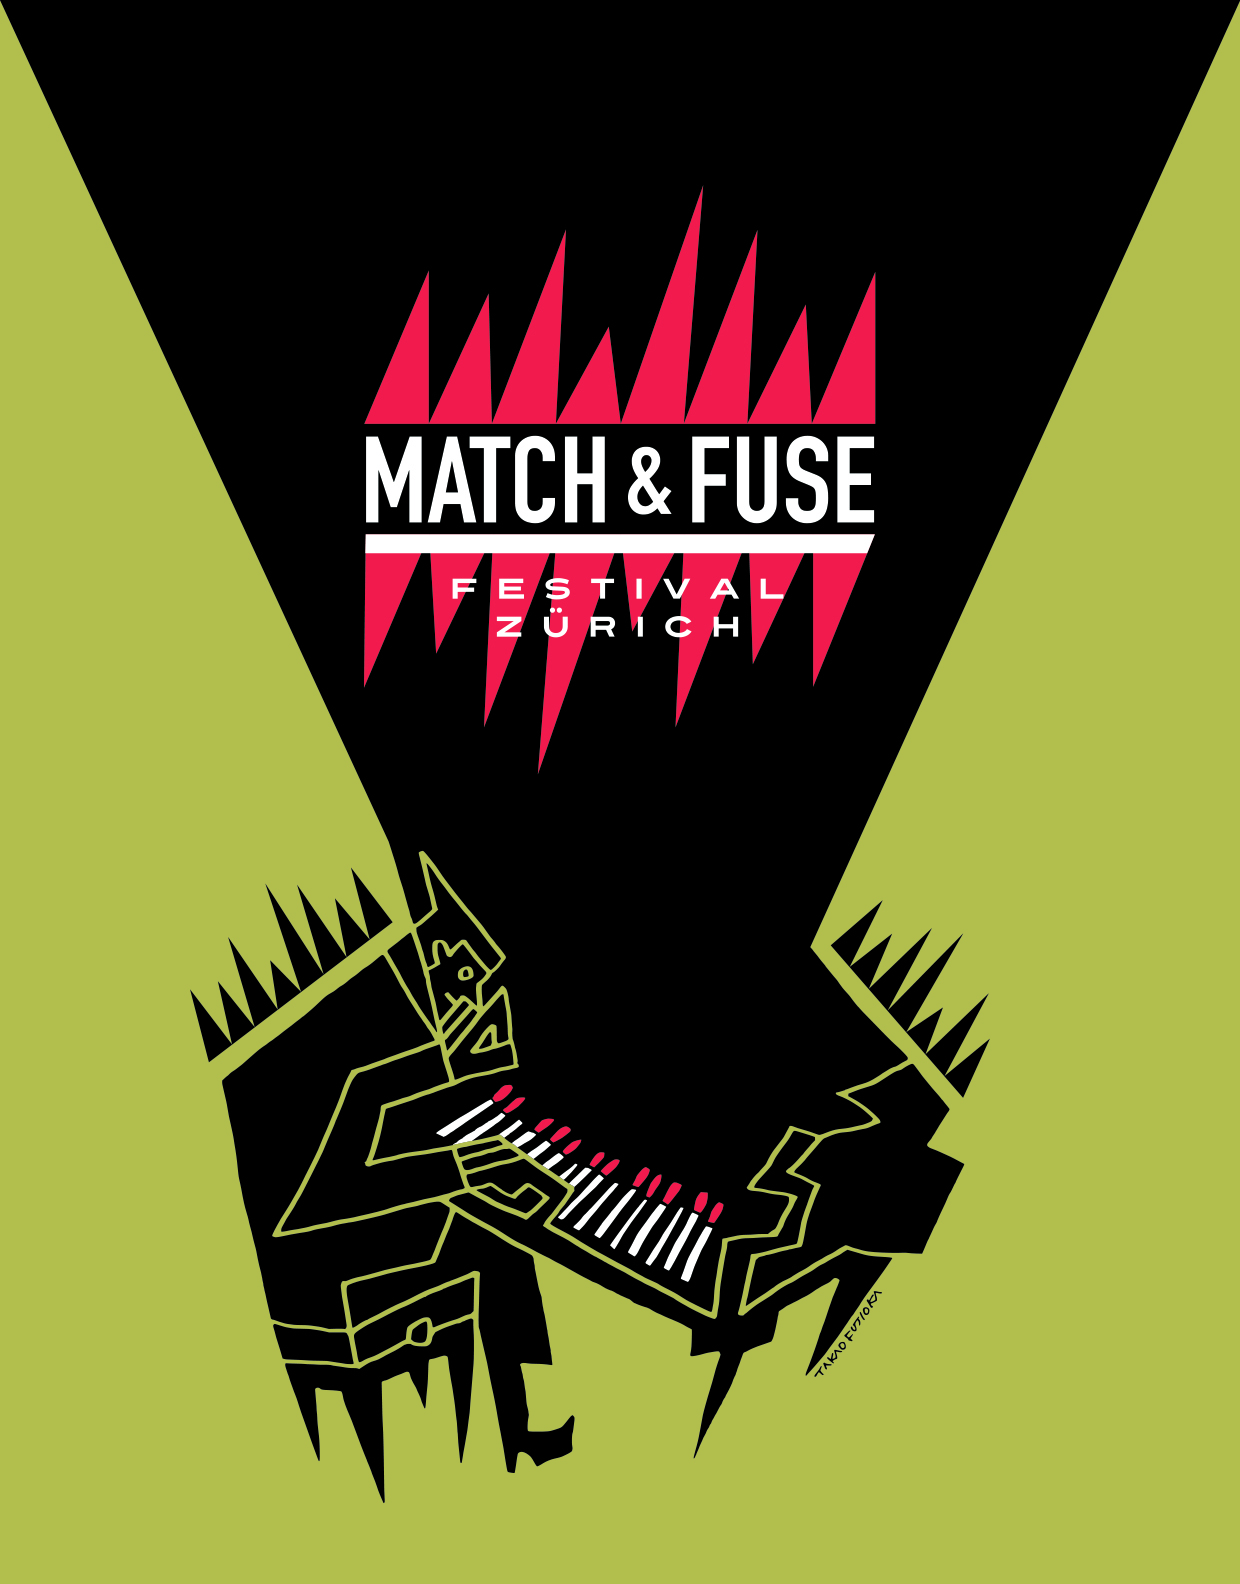 Match & Fuse Festival